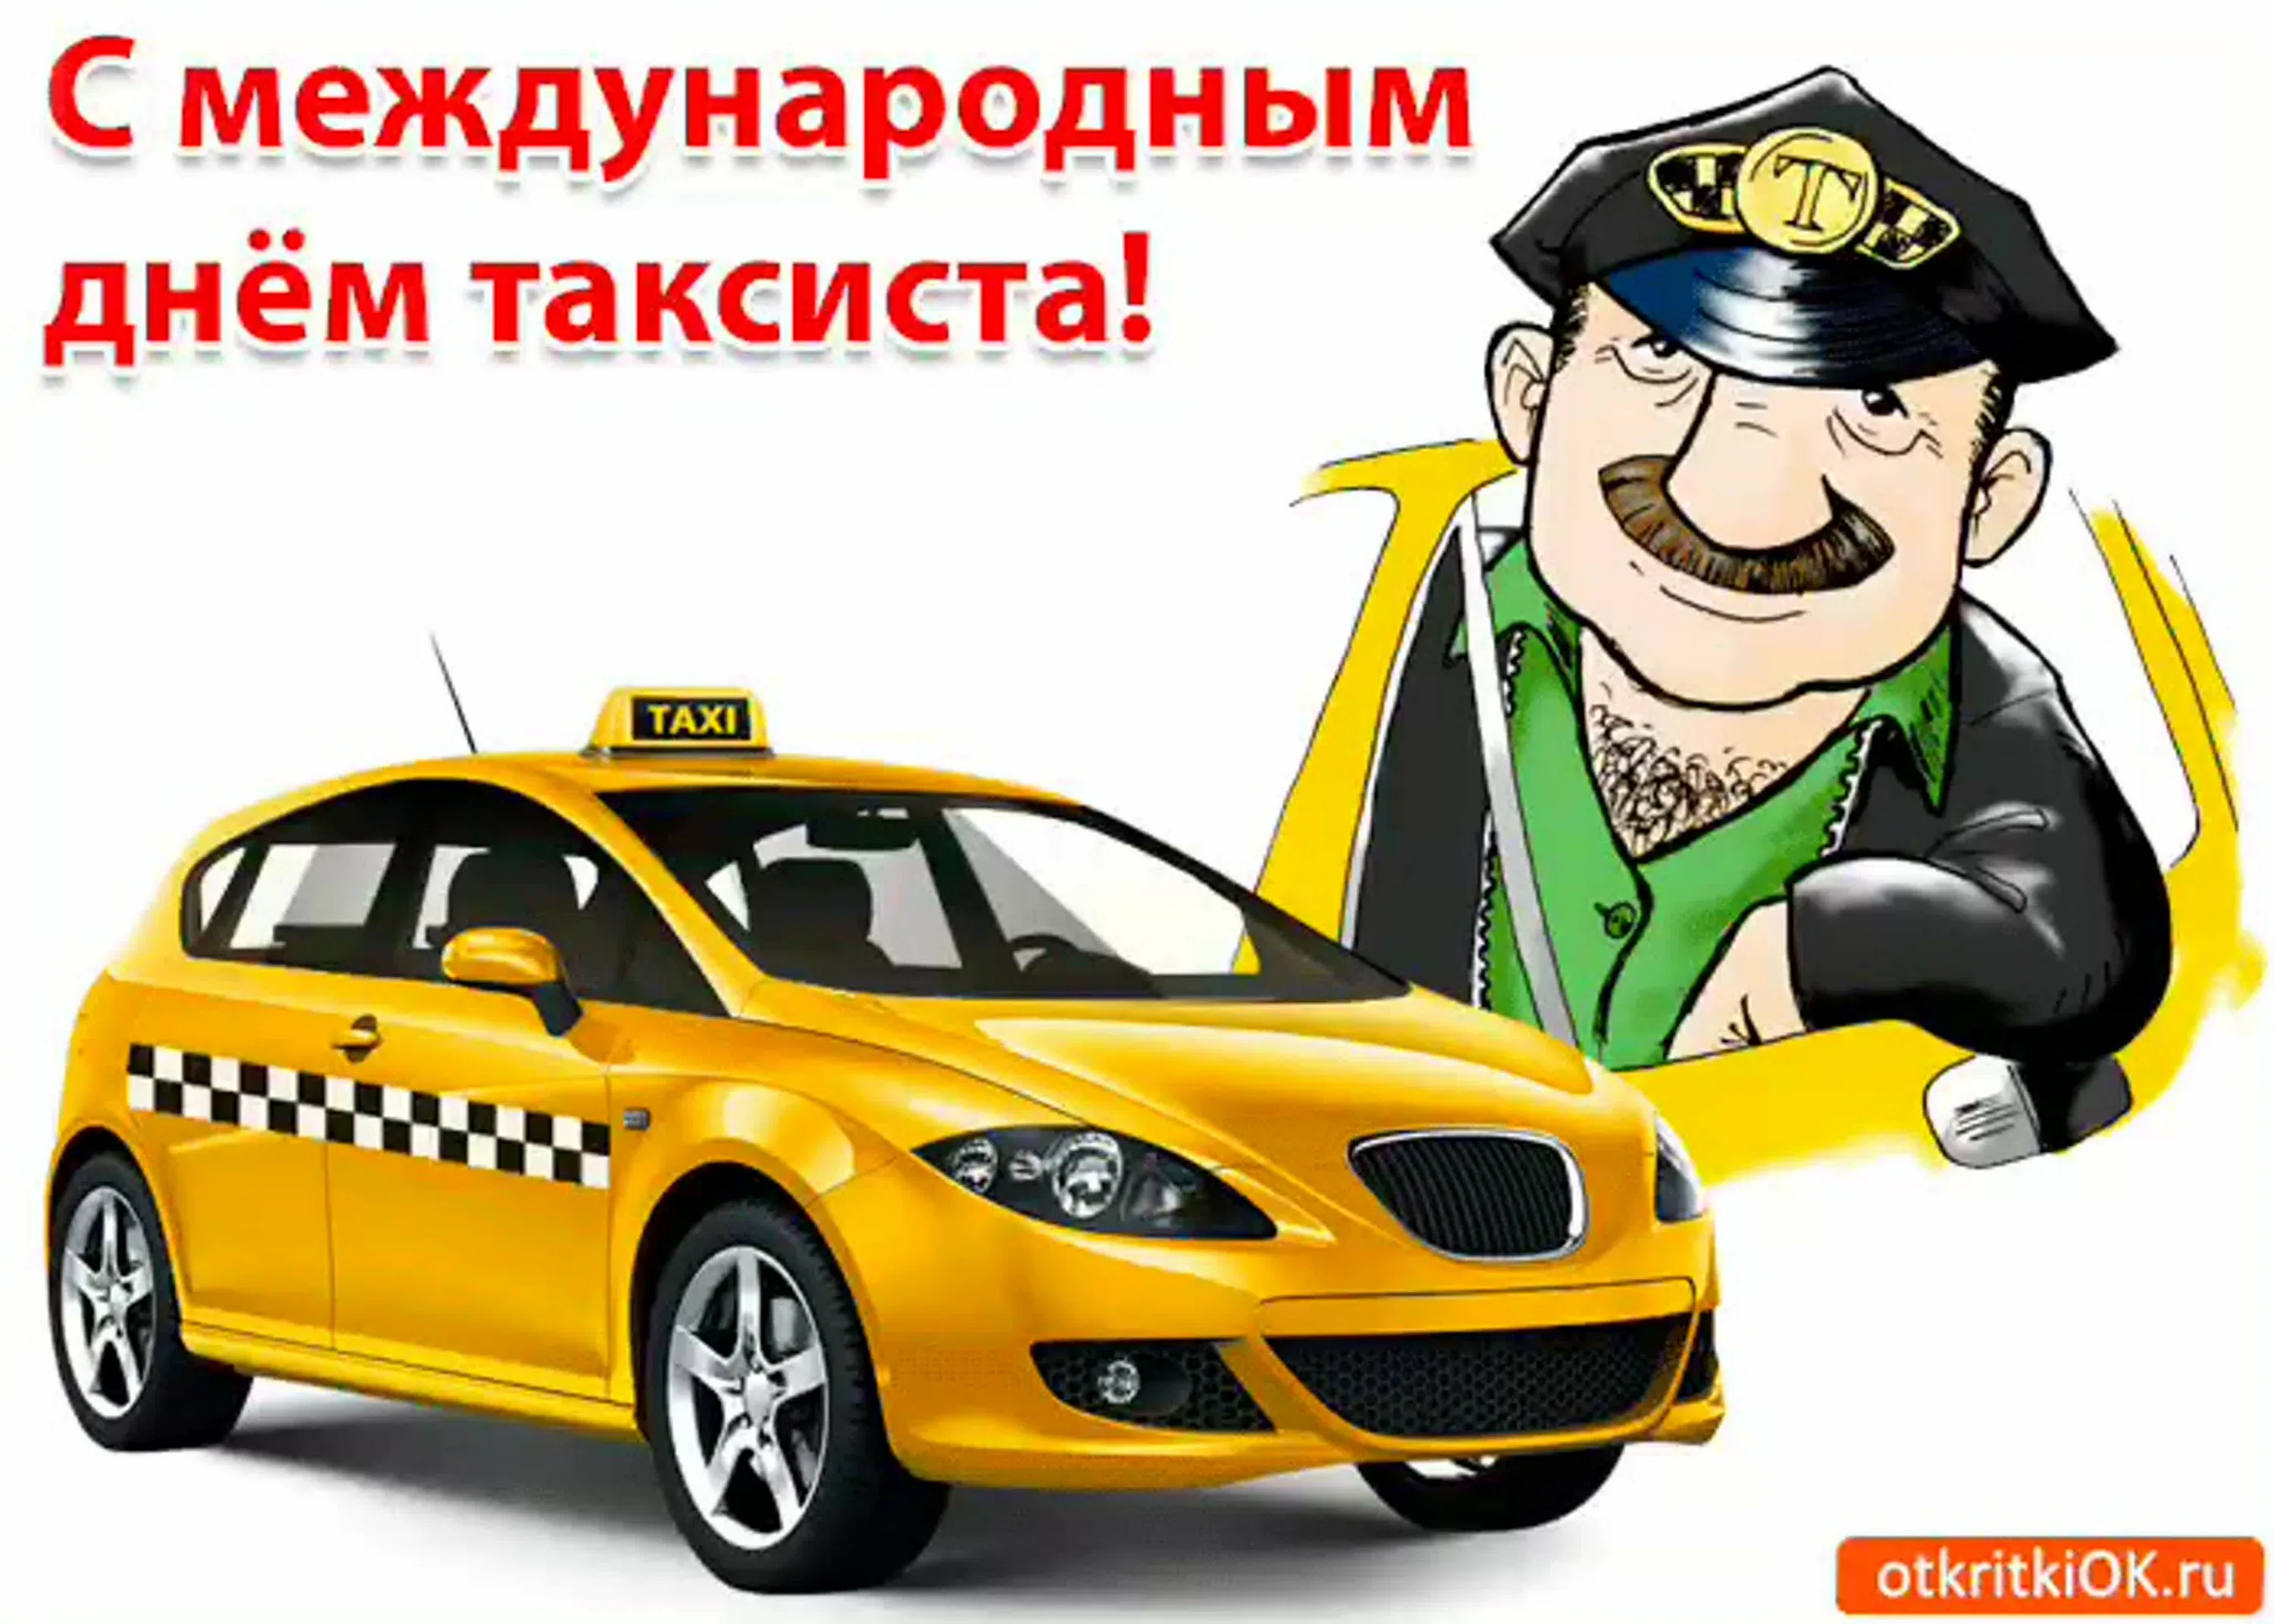 День таксиста. Международный день таксиста. С днём таксиста поздравление. Поздравления с днем таксиста прикольные картинки